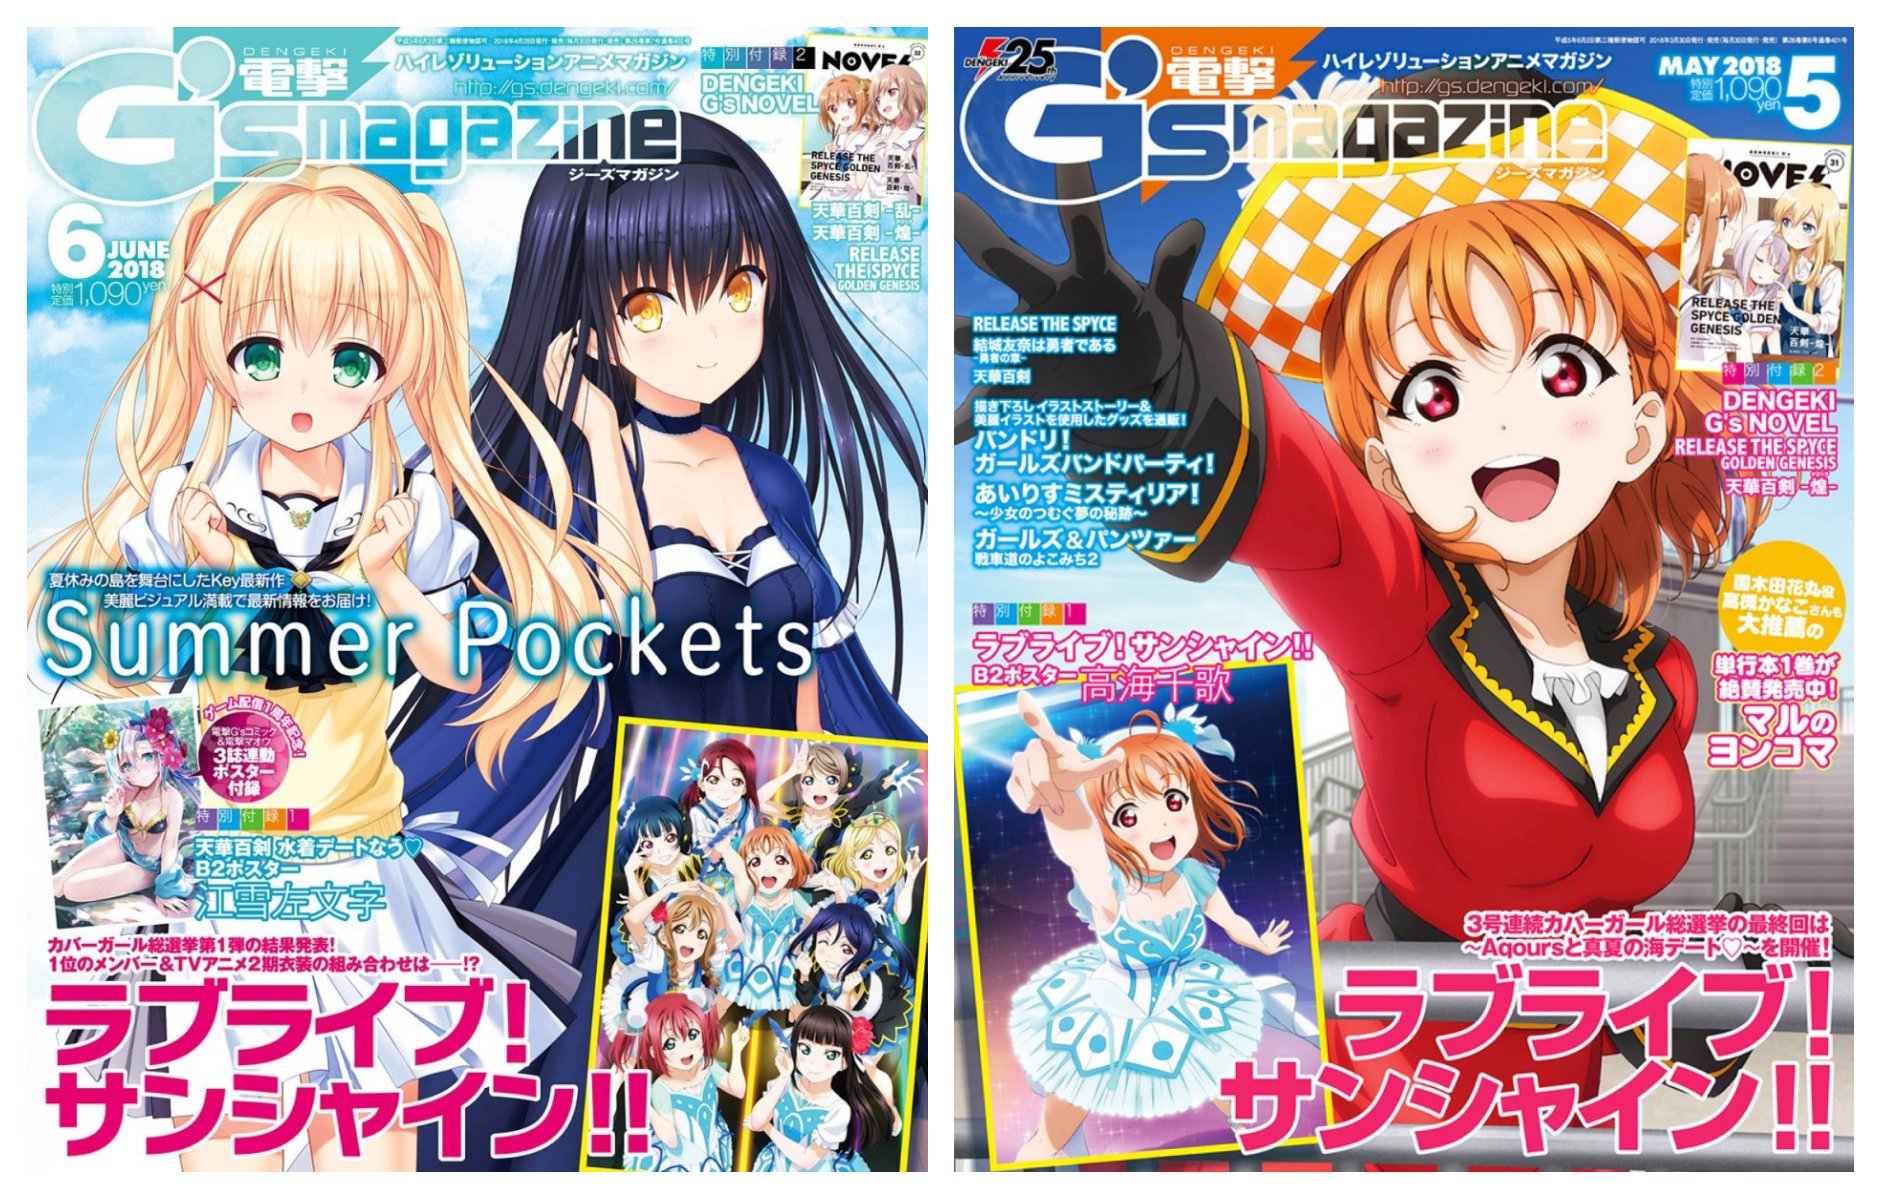 P A M Playasia Bishojo Games Anime Fans Since 1992 Dengeki G S Magazine Provides All The Info About The Glamorous Bishojo World T Co P421cyivep Dengekigs Magazine Bishojo T Co Qyhwqms8e3